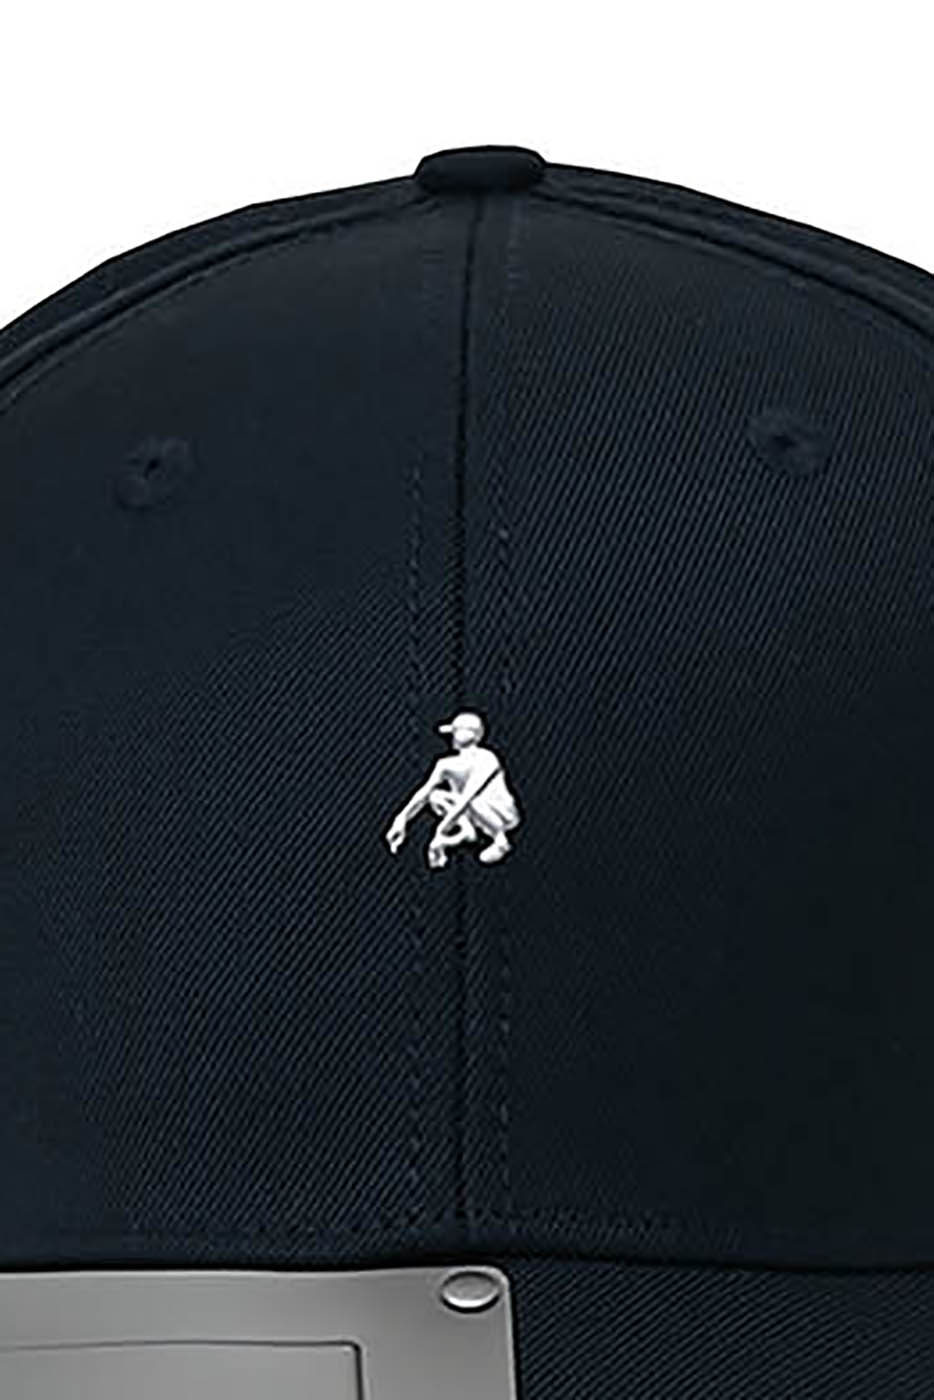 FACEONLAB Metal Plate LOGO Cap Black, premium urban and streetwear designers apparel on PROJECTISR.com, FACEONLAB